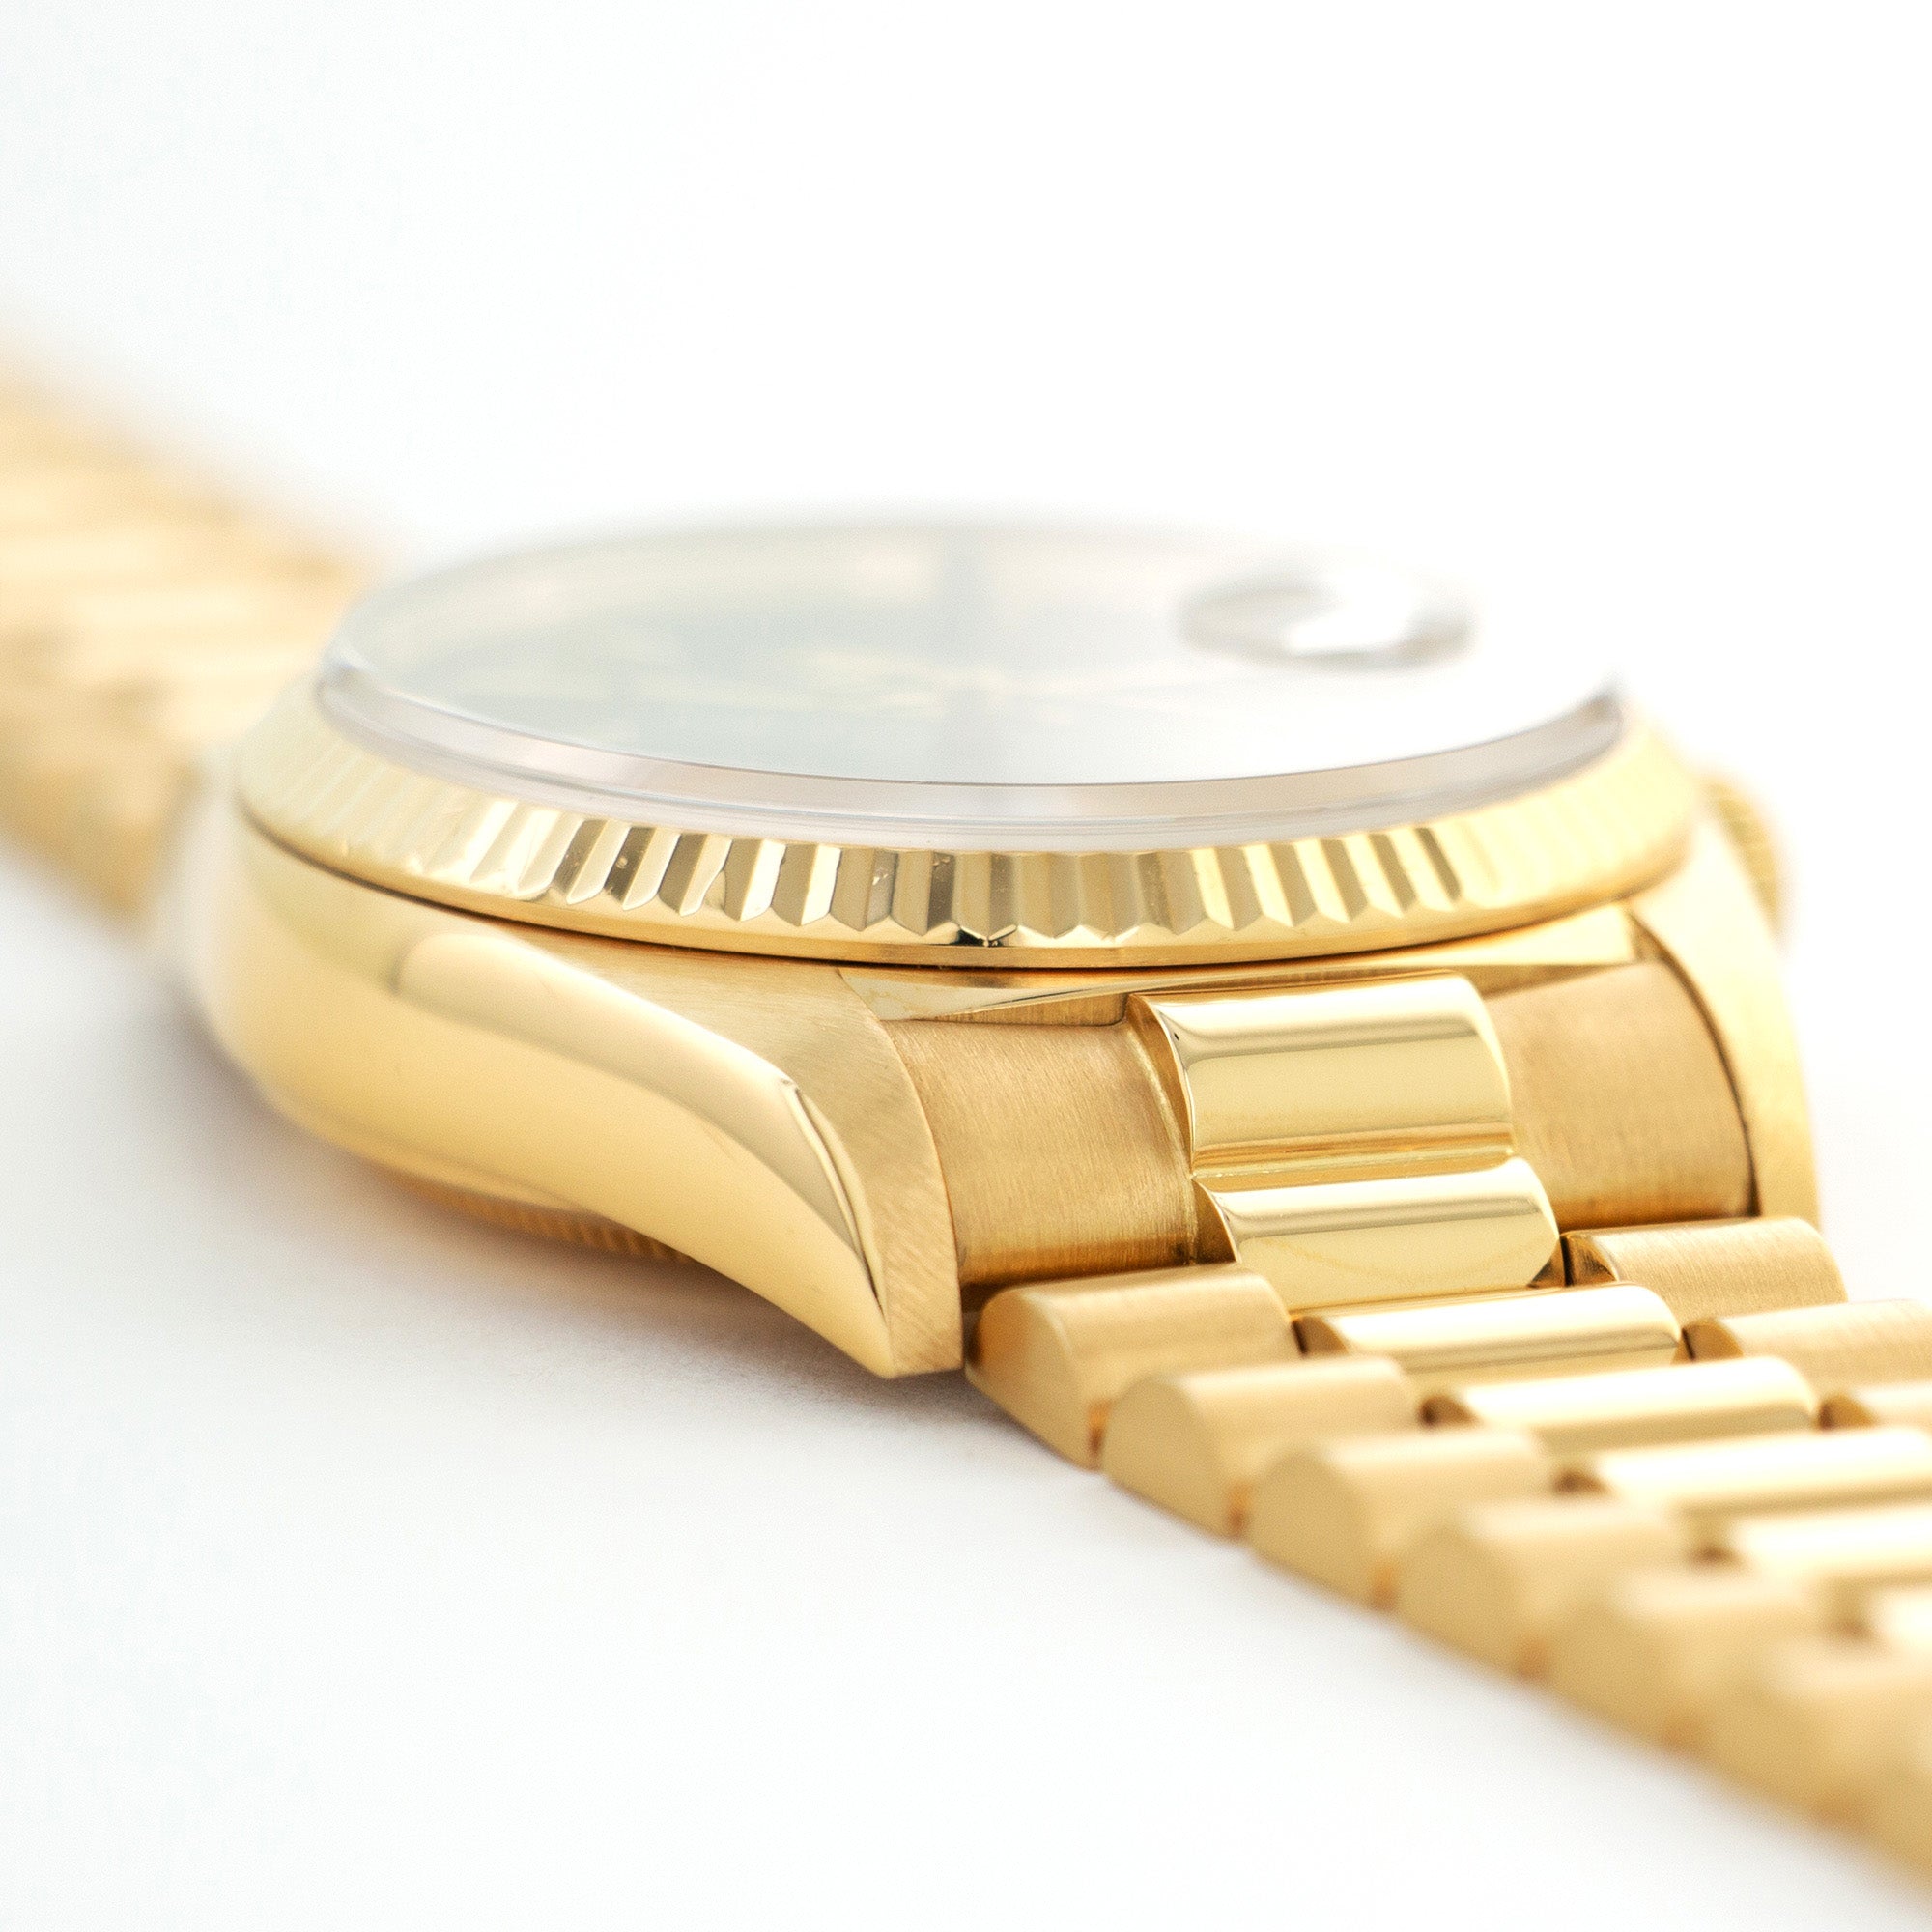 Rolex - Rolex Yellow Gold Day-Date Watch Ref. 18038 - The Keystone Watches